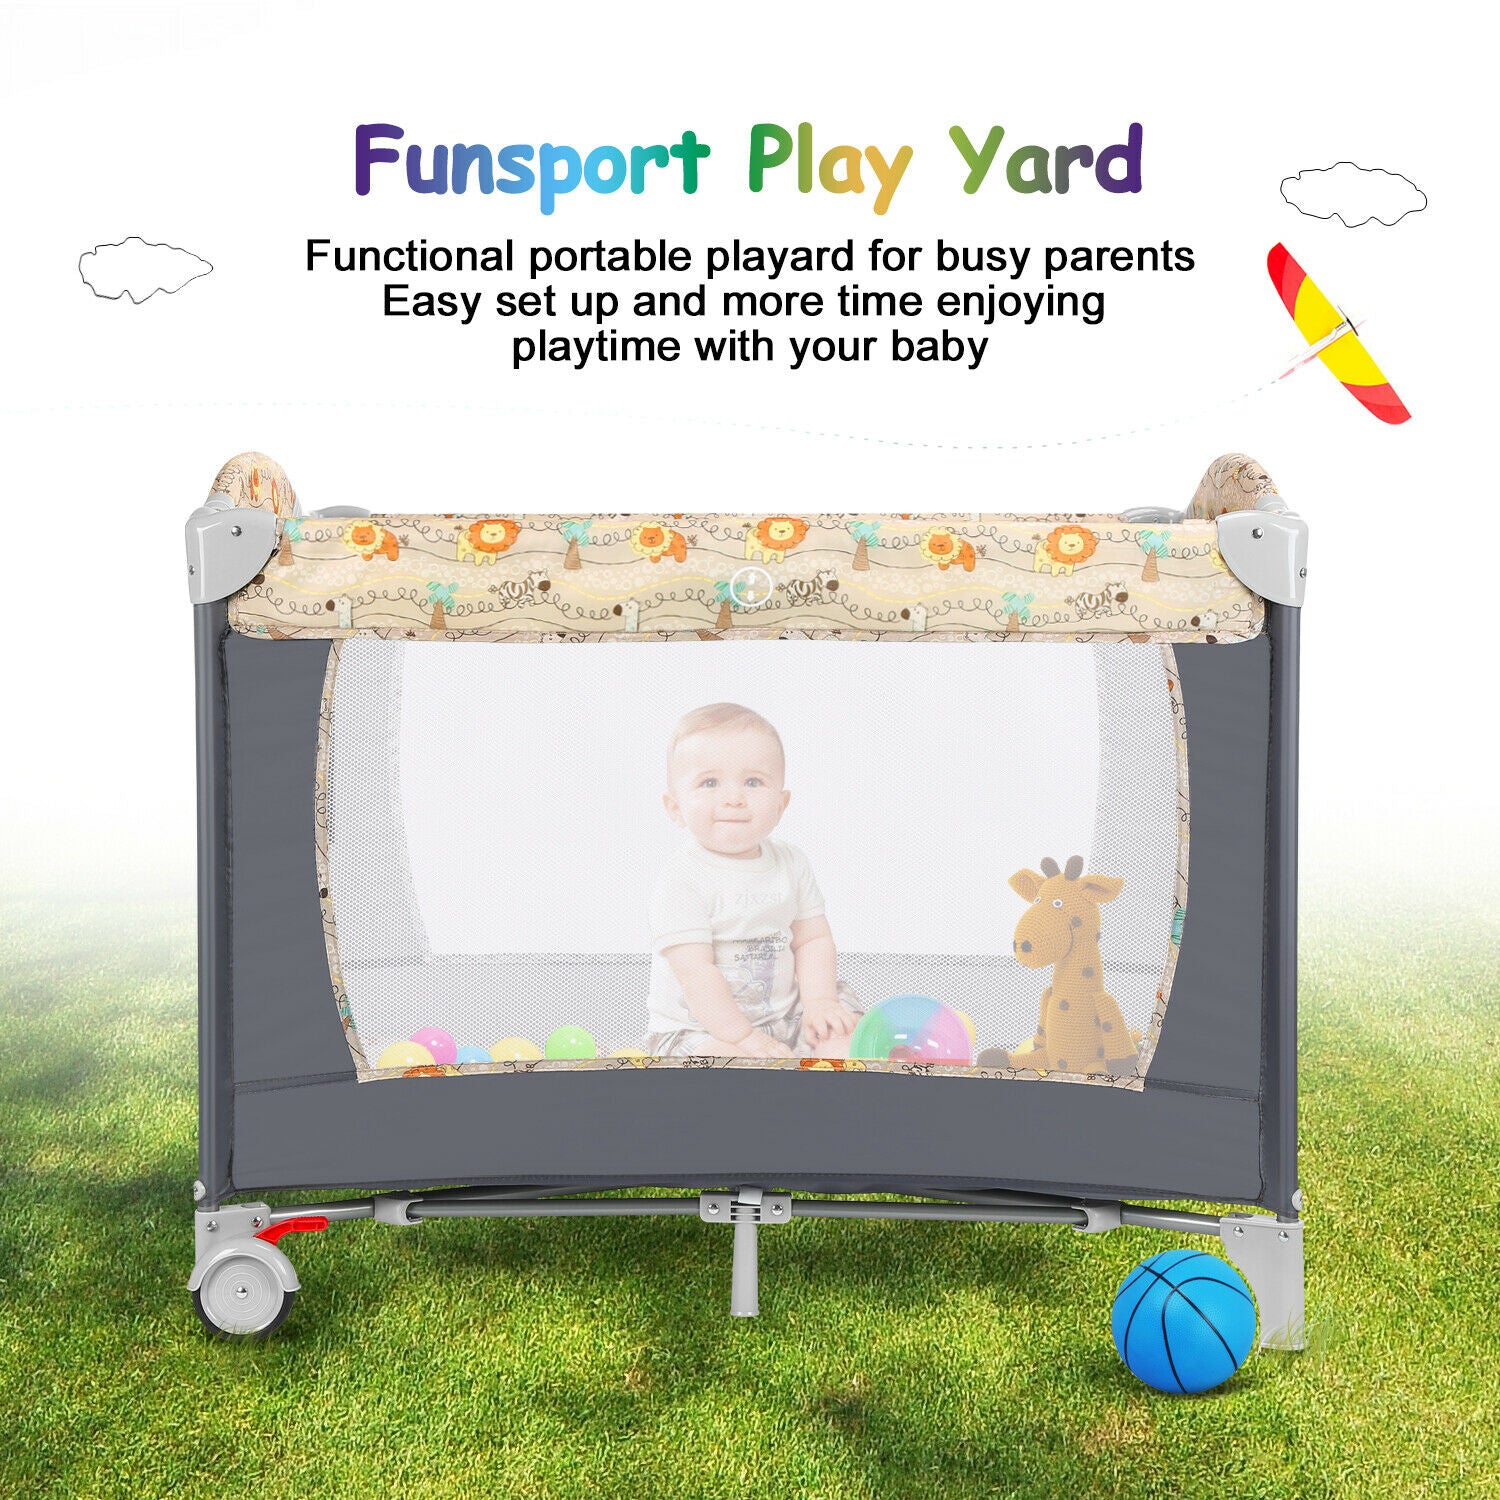 Toyship's Baby Crib - Gray